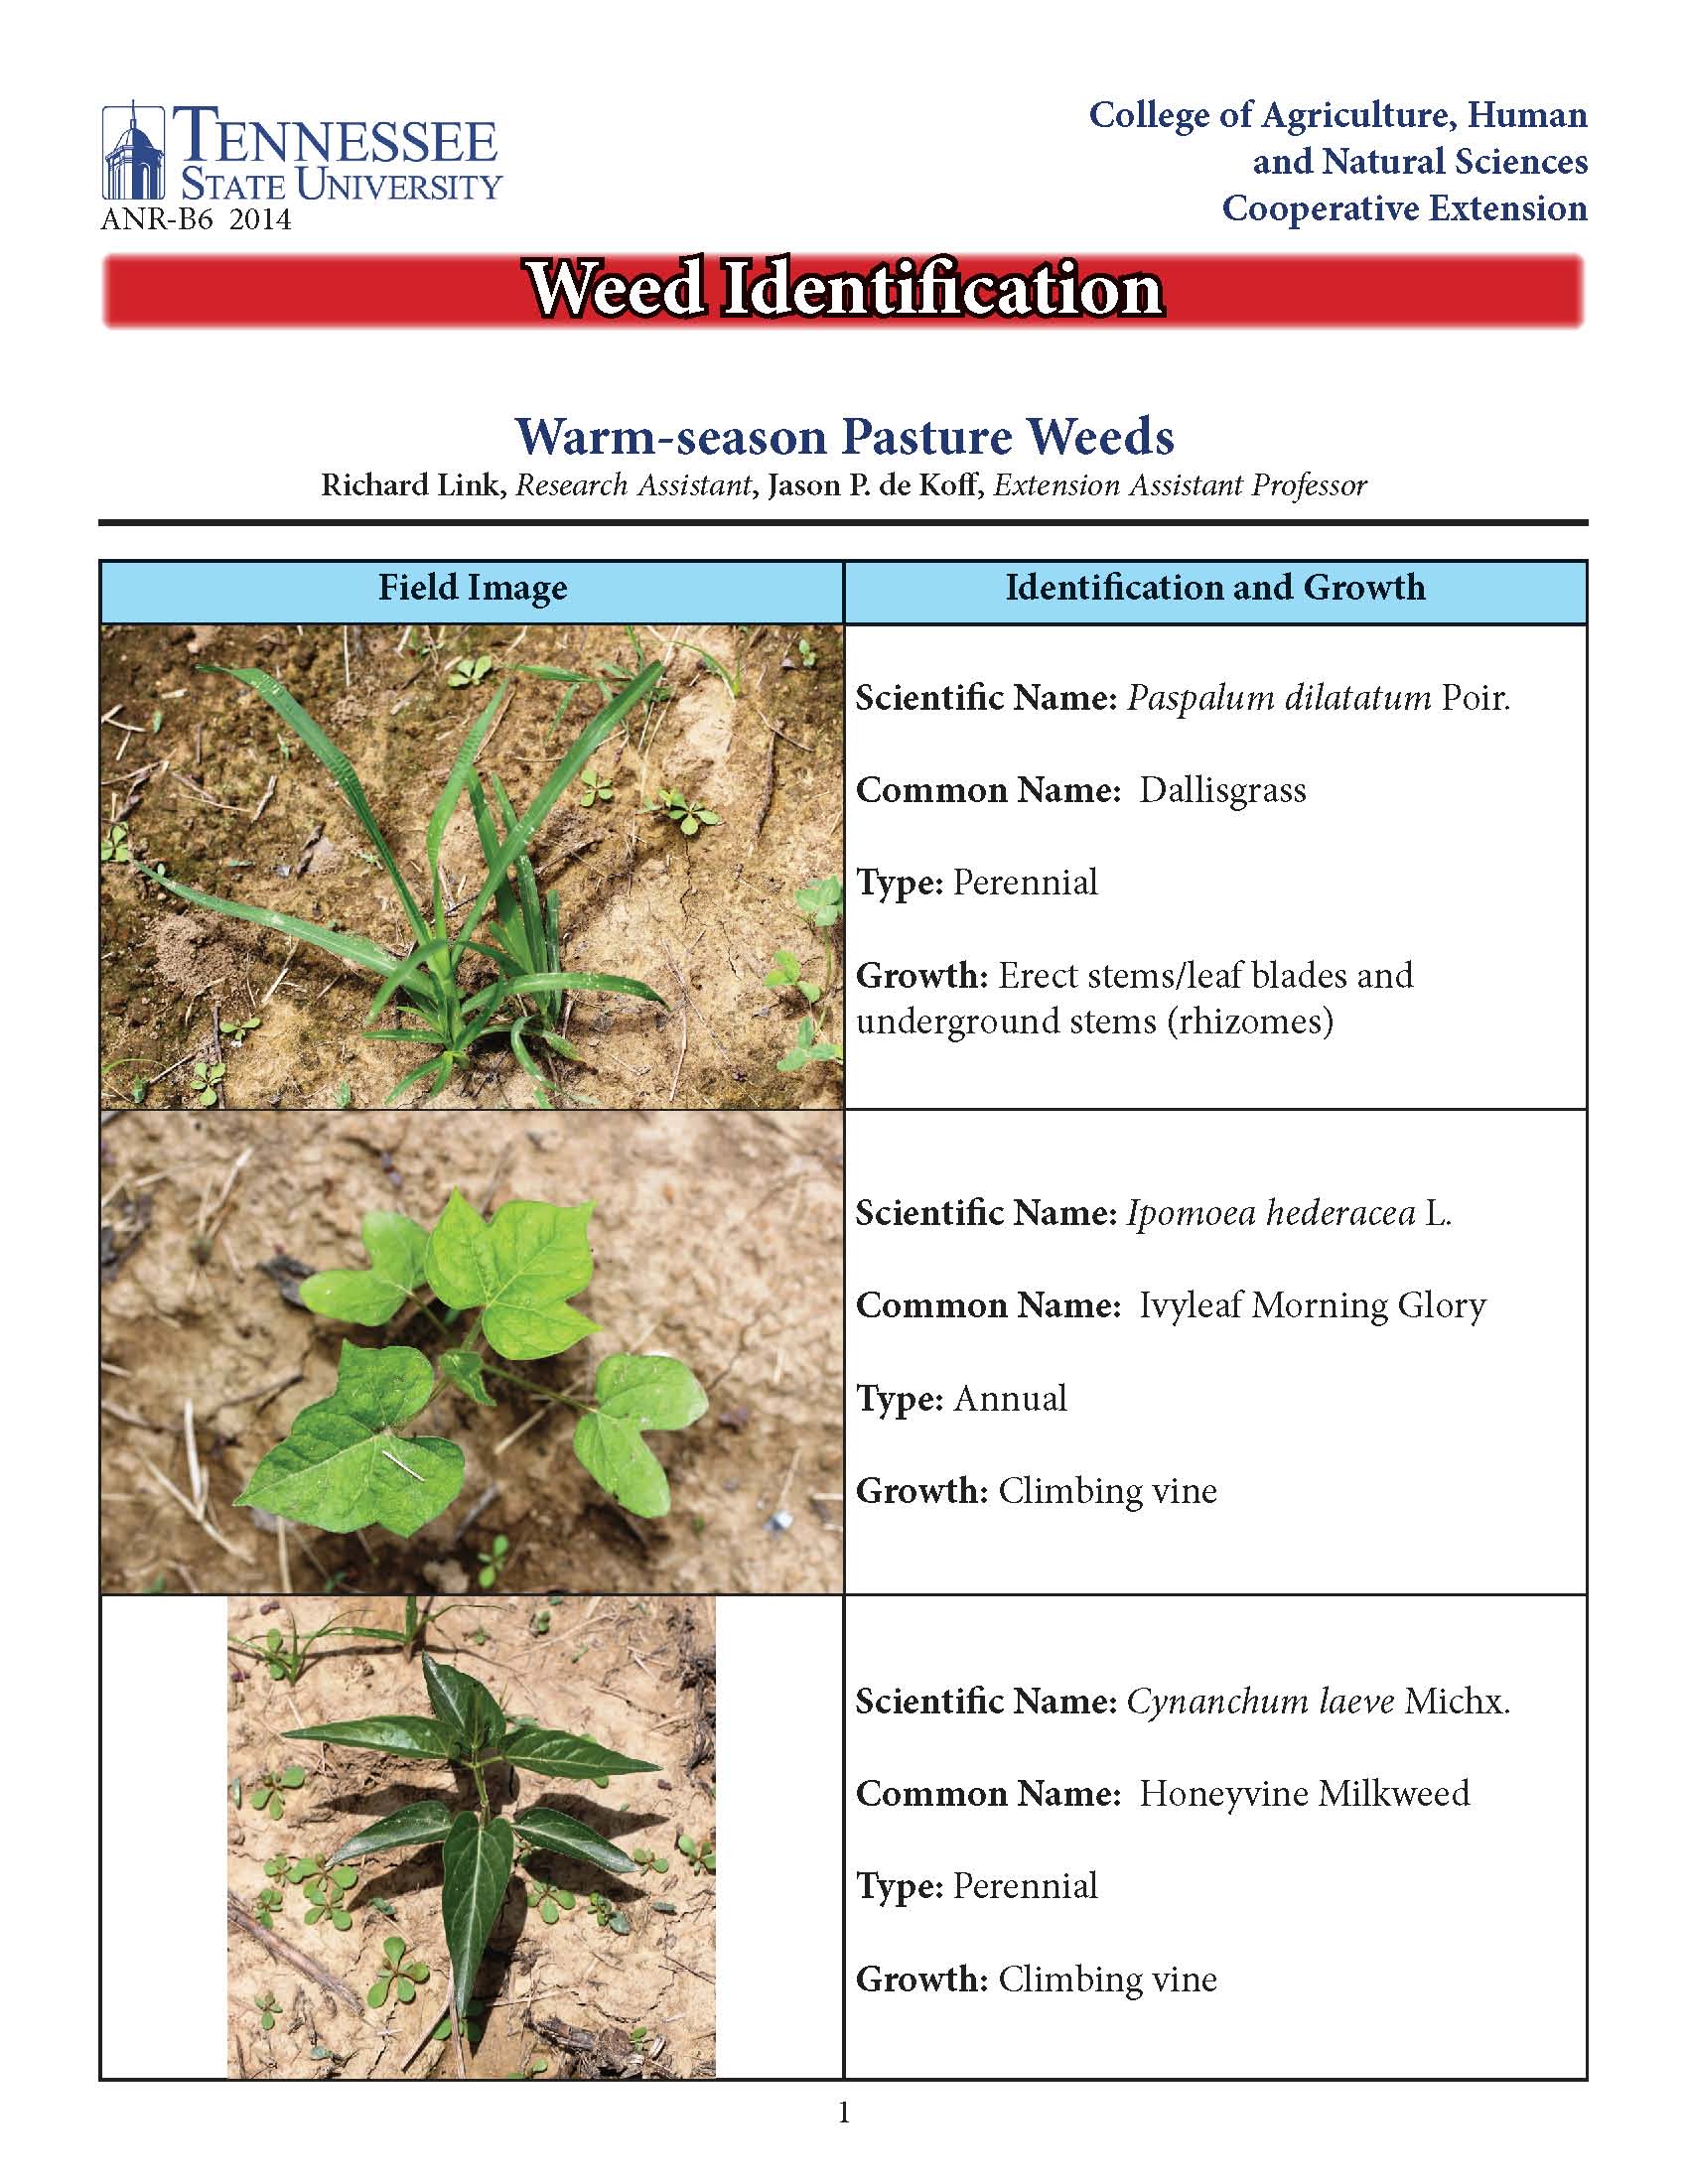 Warm-season pasture weed identification fact sheet